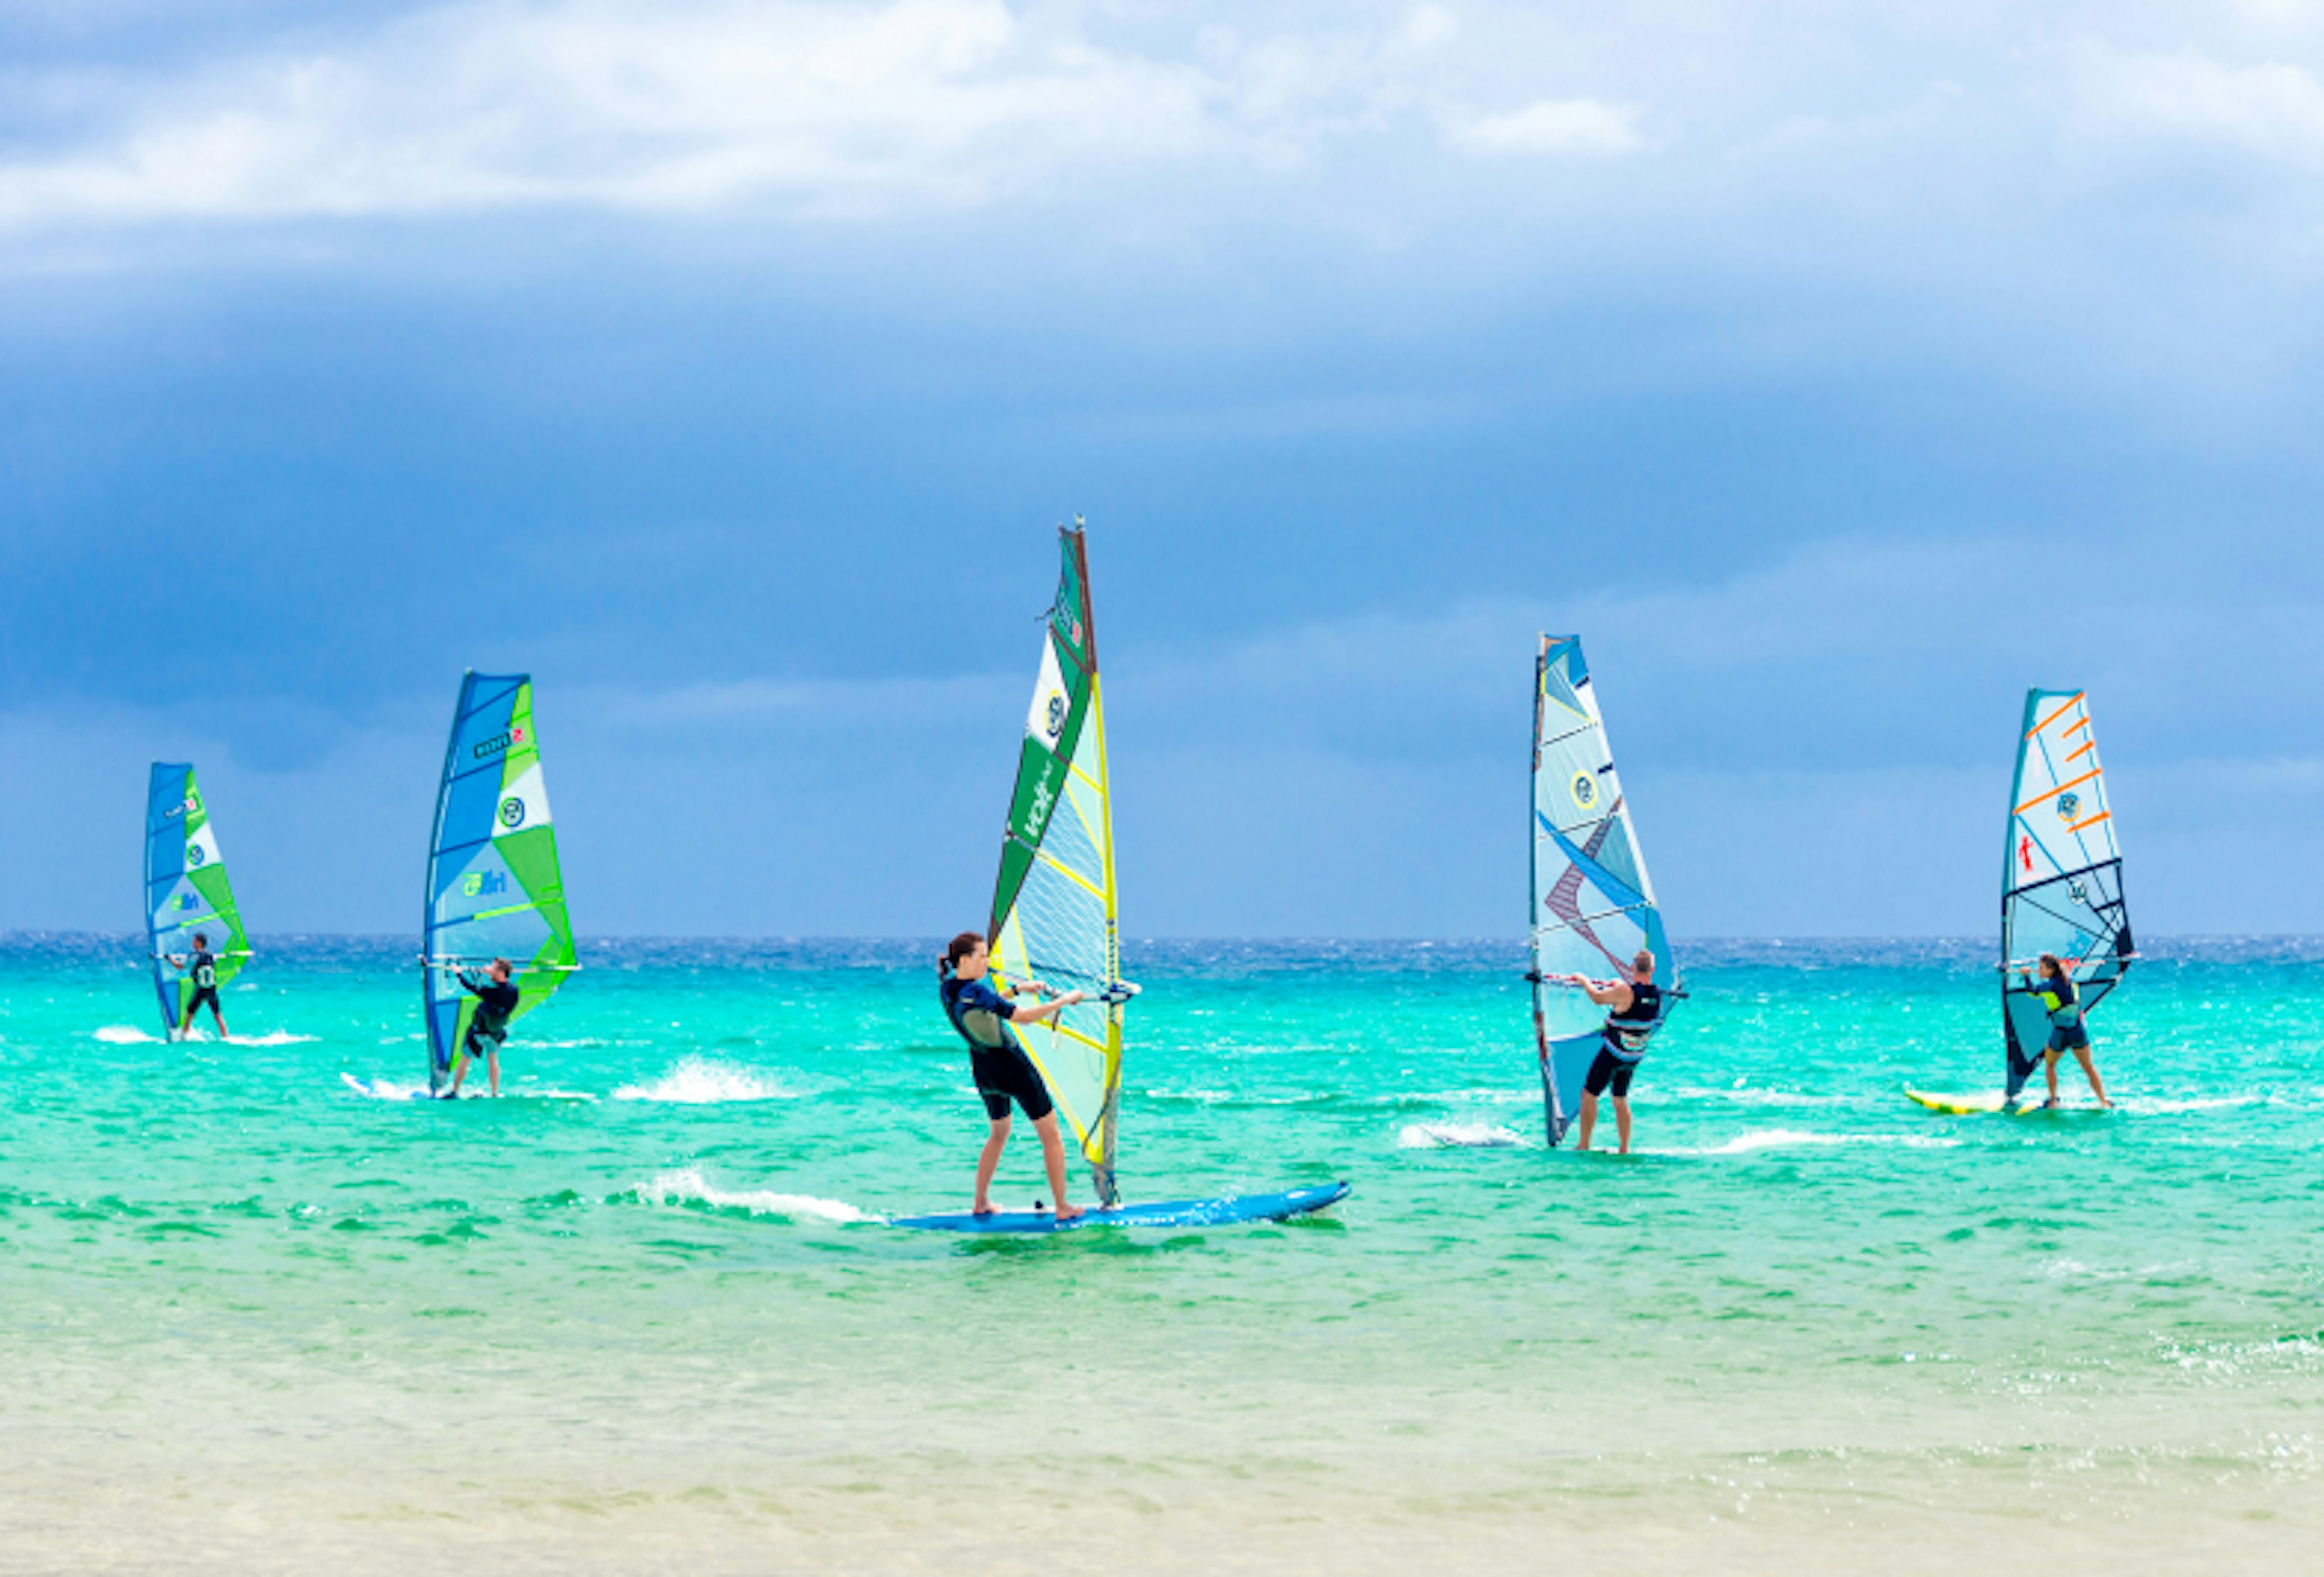 Windsurfing competition - Sotavento beach, Fuerteventura